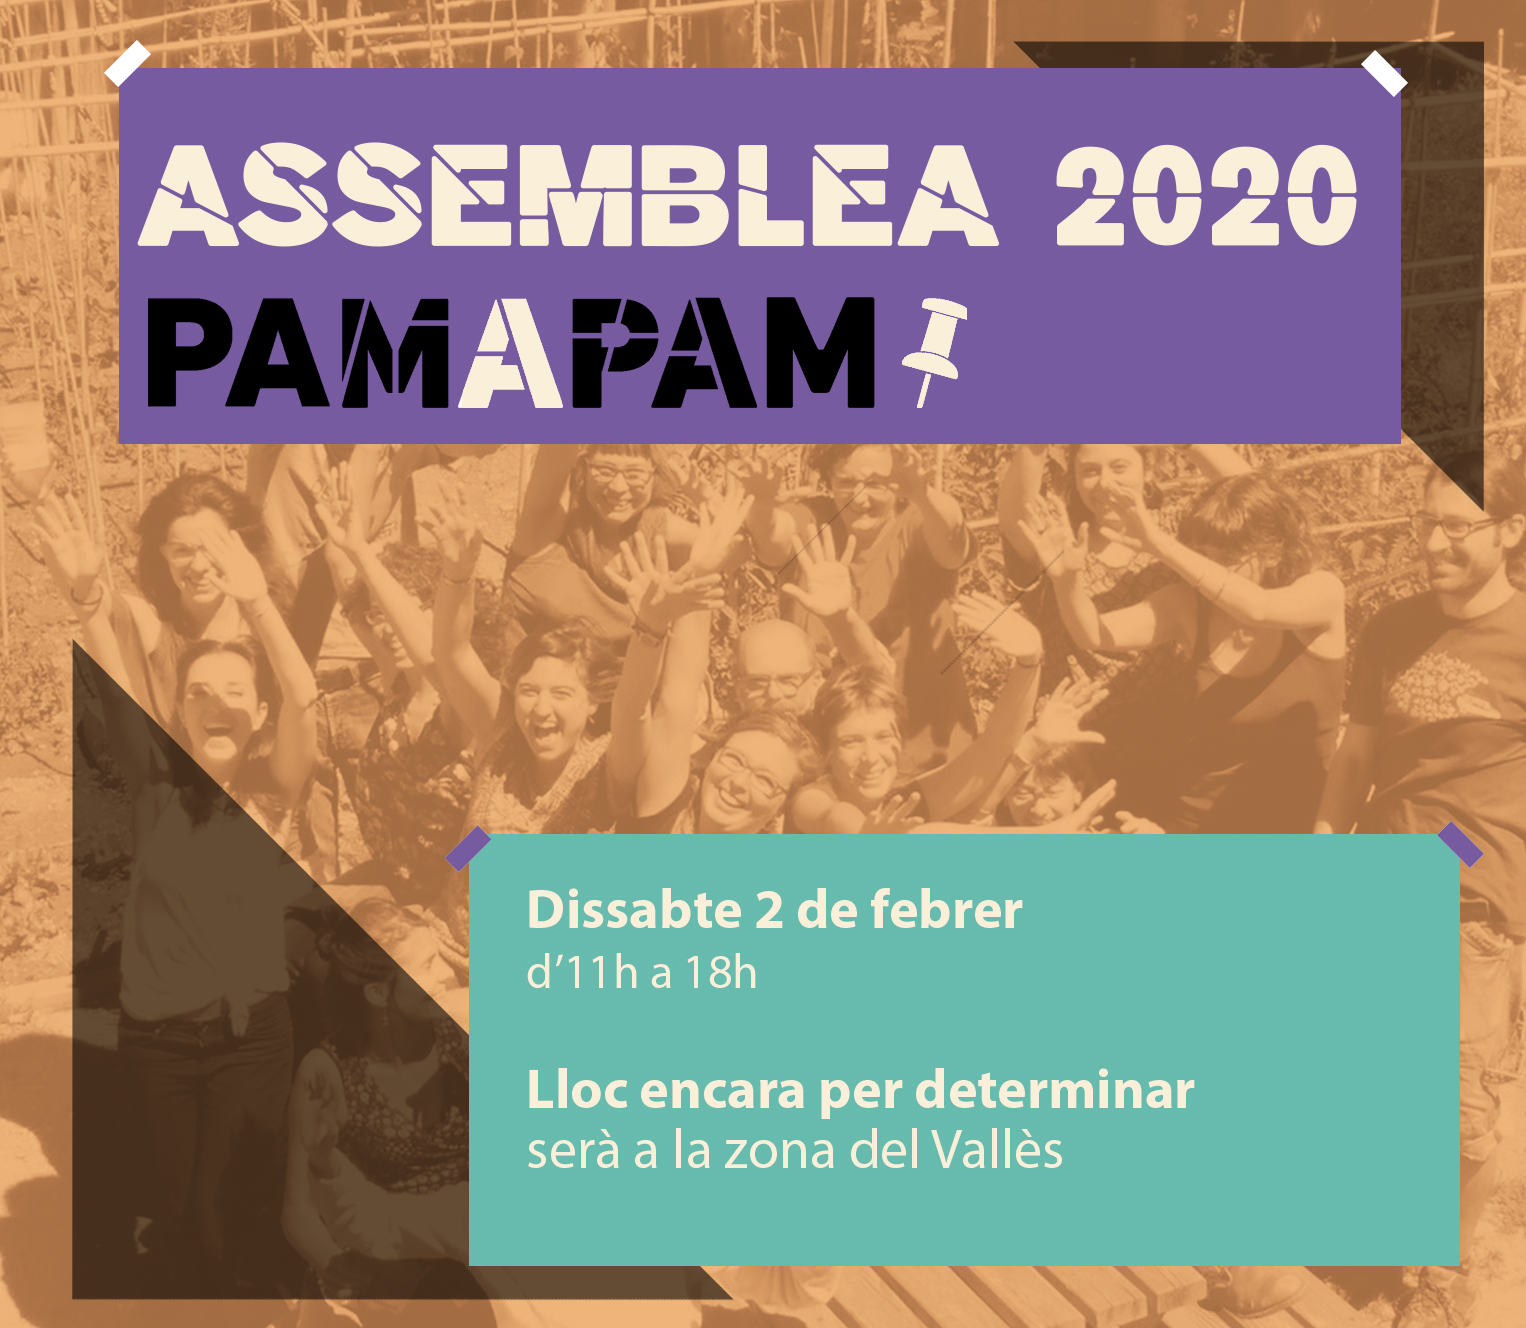 Assemblea General Pam a Pam @ Can Capablanca